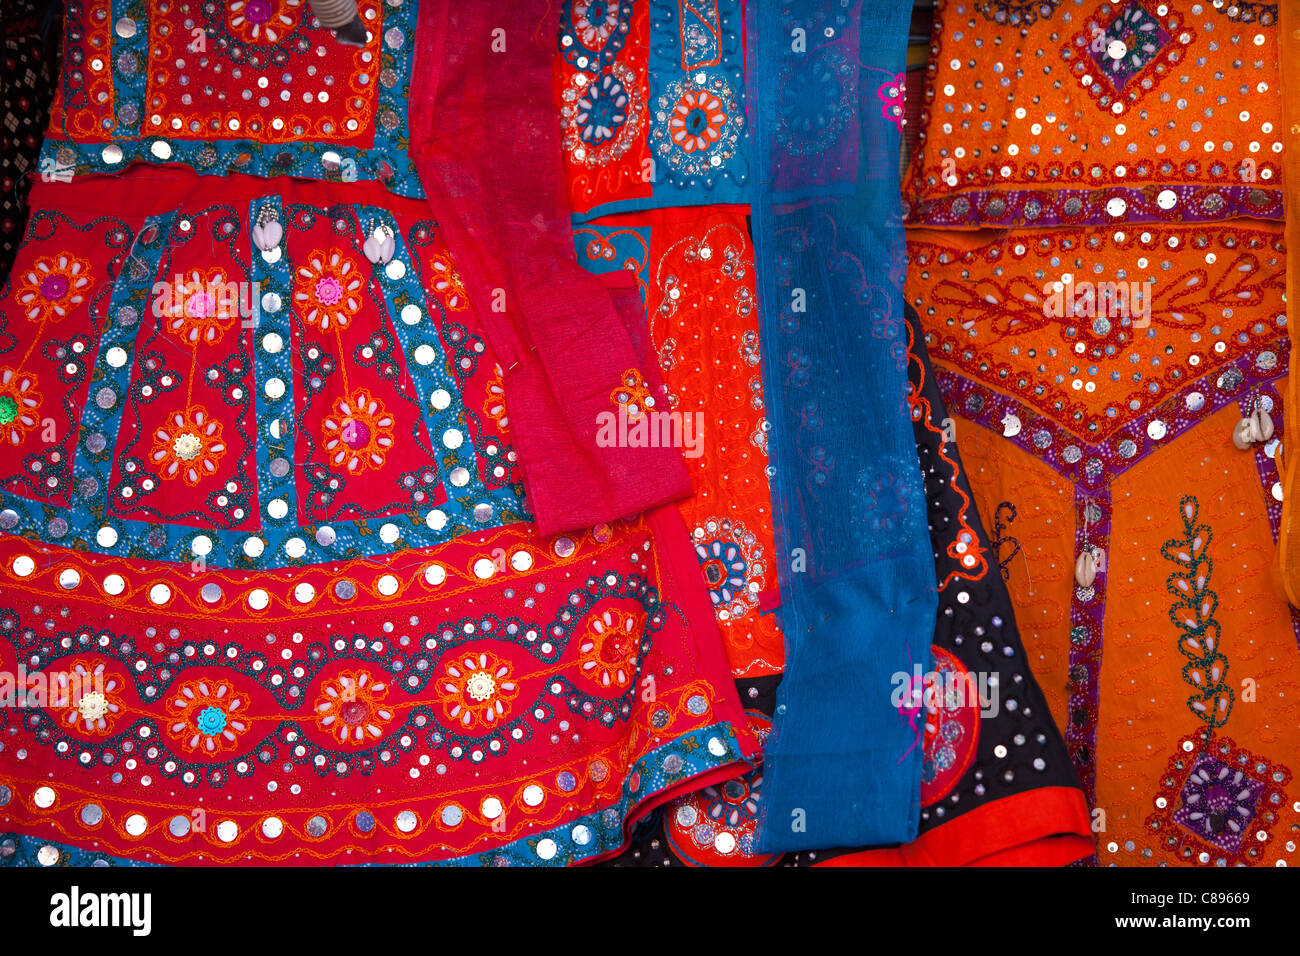 Traditional muslim lehanga dresses on display at stall in bazaar in Jaipur, Rajasthan, Northern India Stock Photo